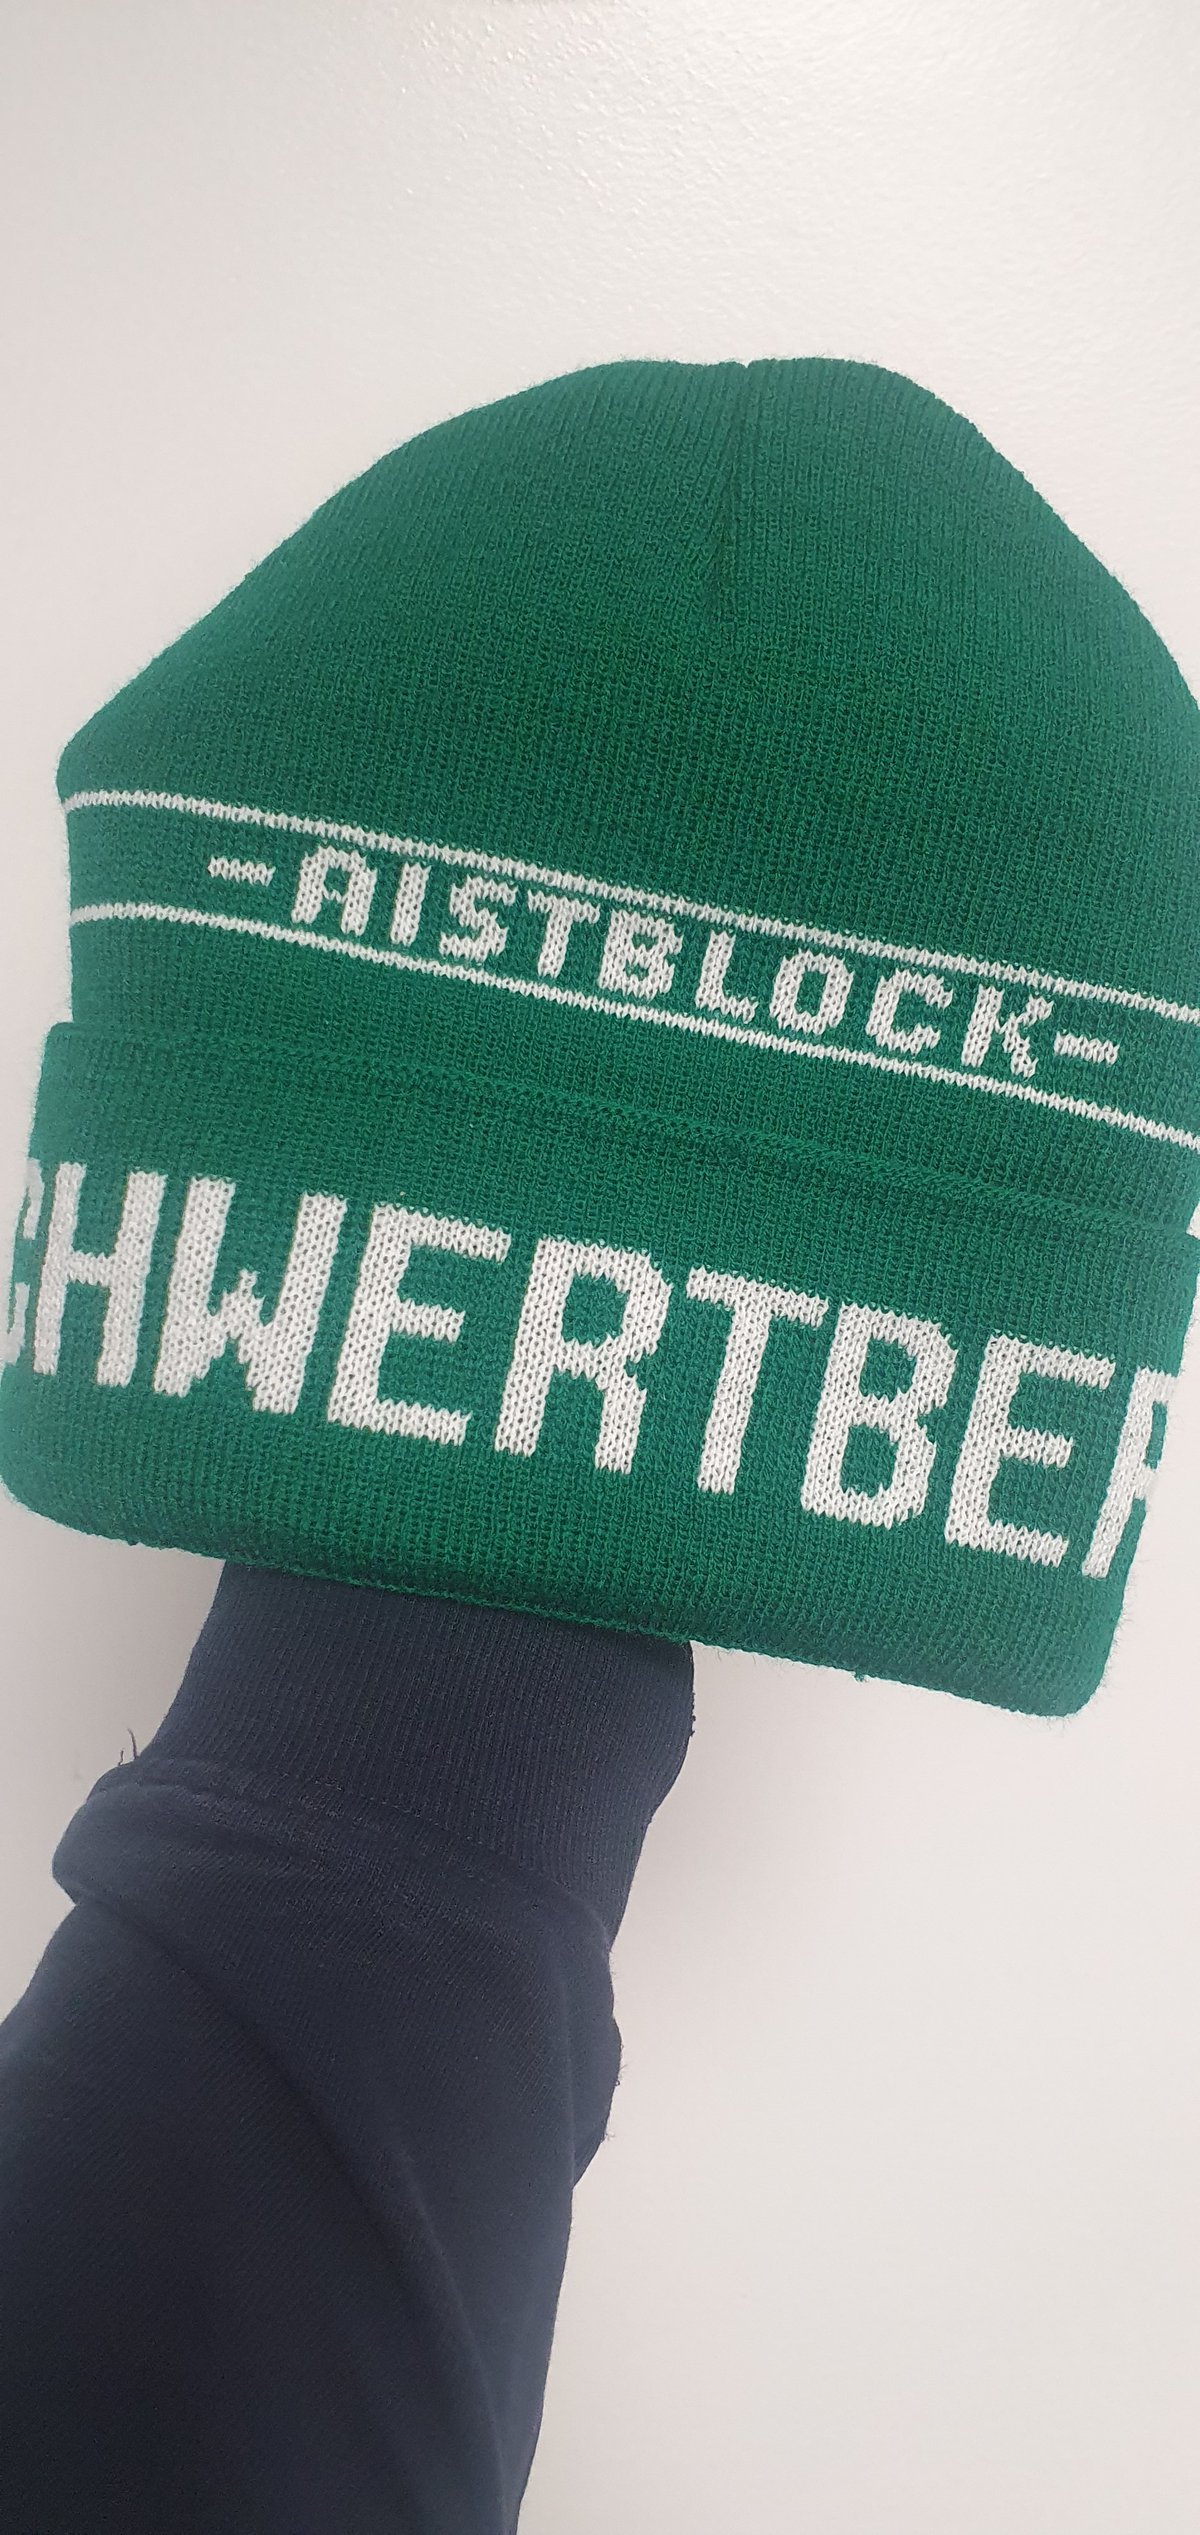 **BARGAIN**ASKÖ Schwertberg Steinbach, Aistblock Winter Hat. Football/Ultras Brand New.